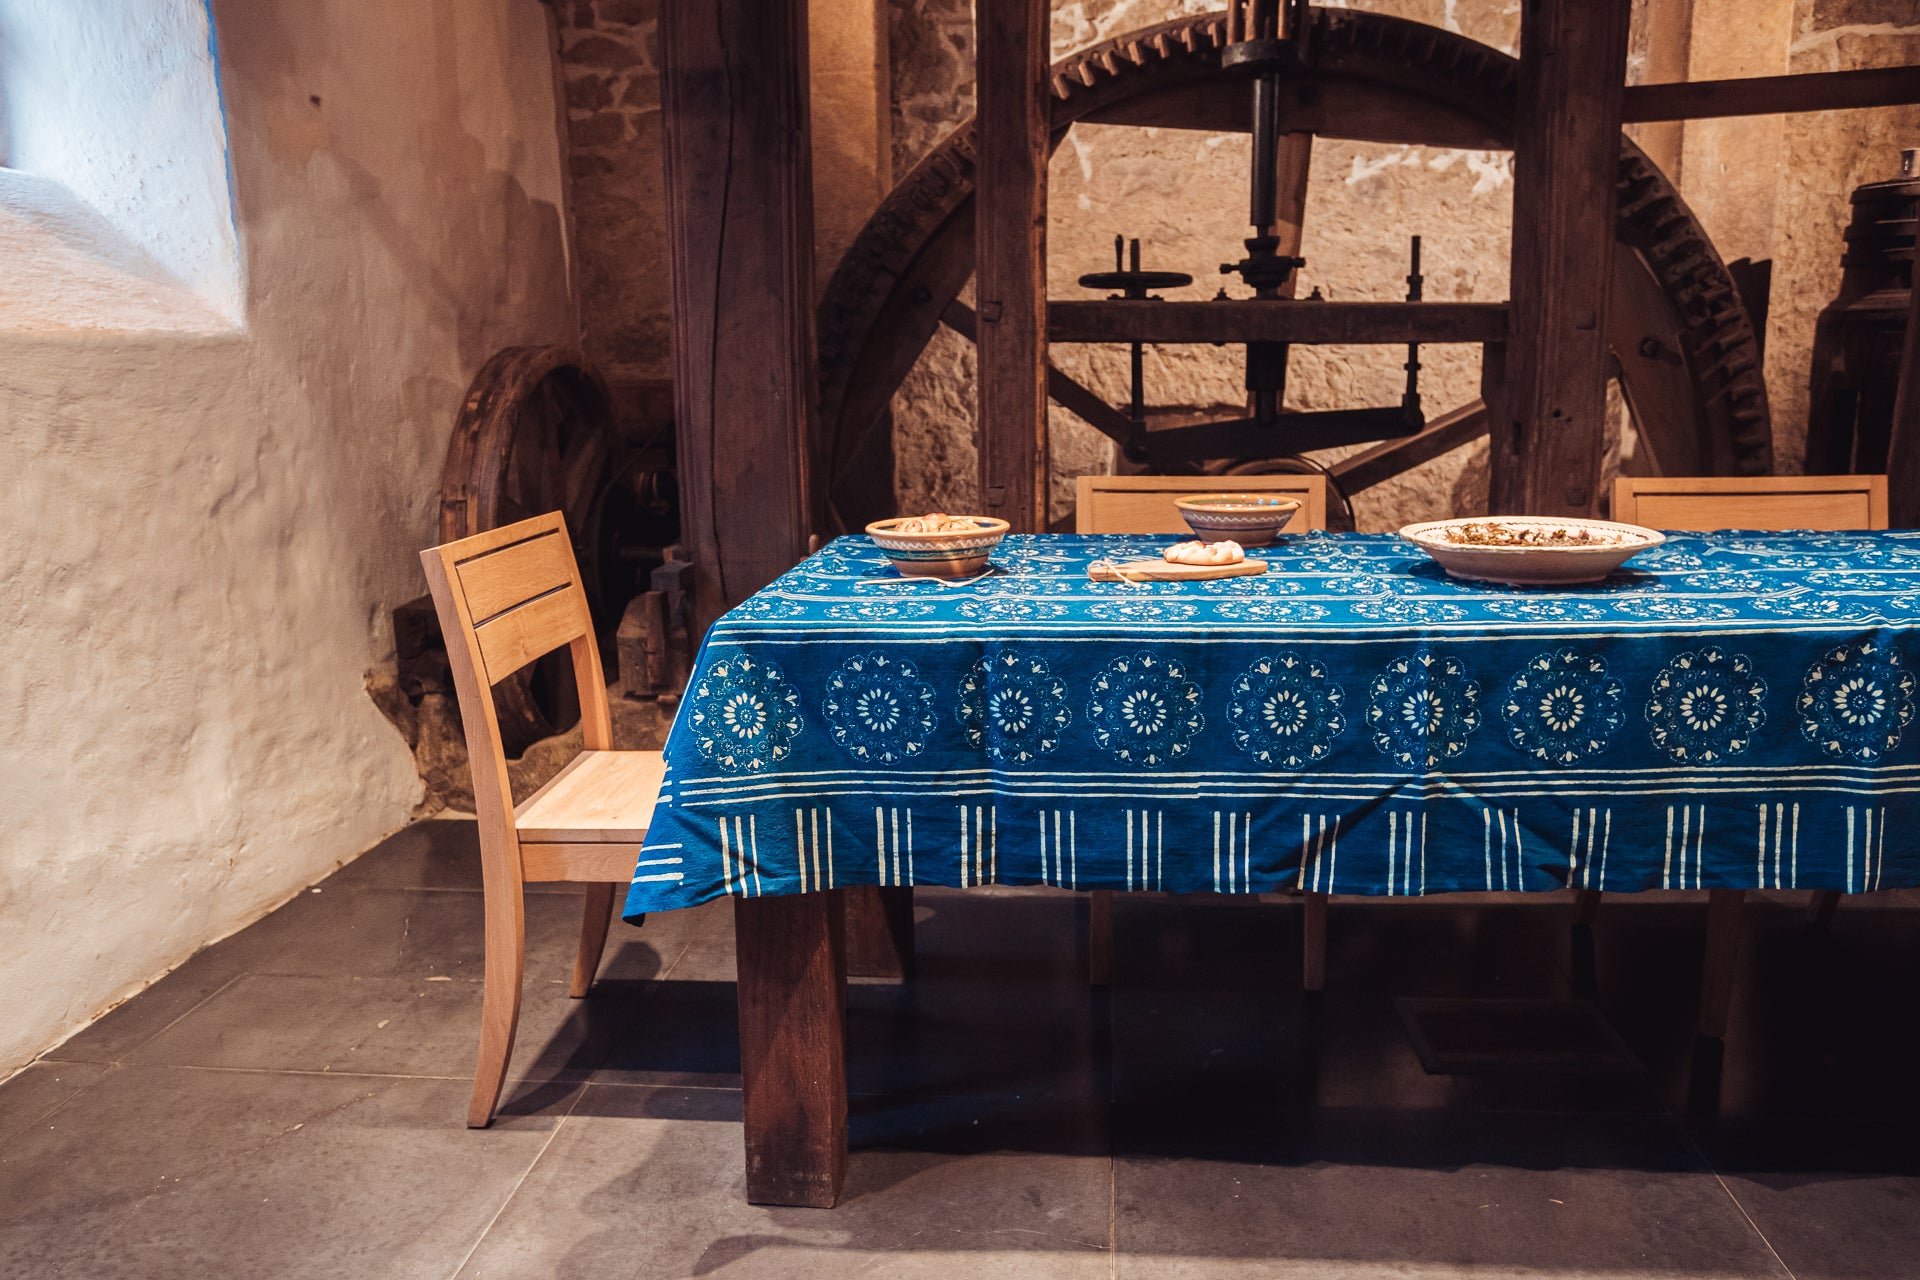 Table Cloth: Antique handwoven Hungarian hemp wax resist indigo - TW137